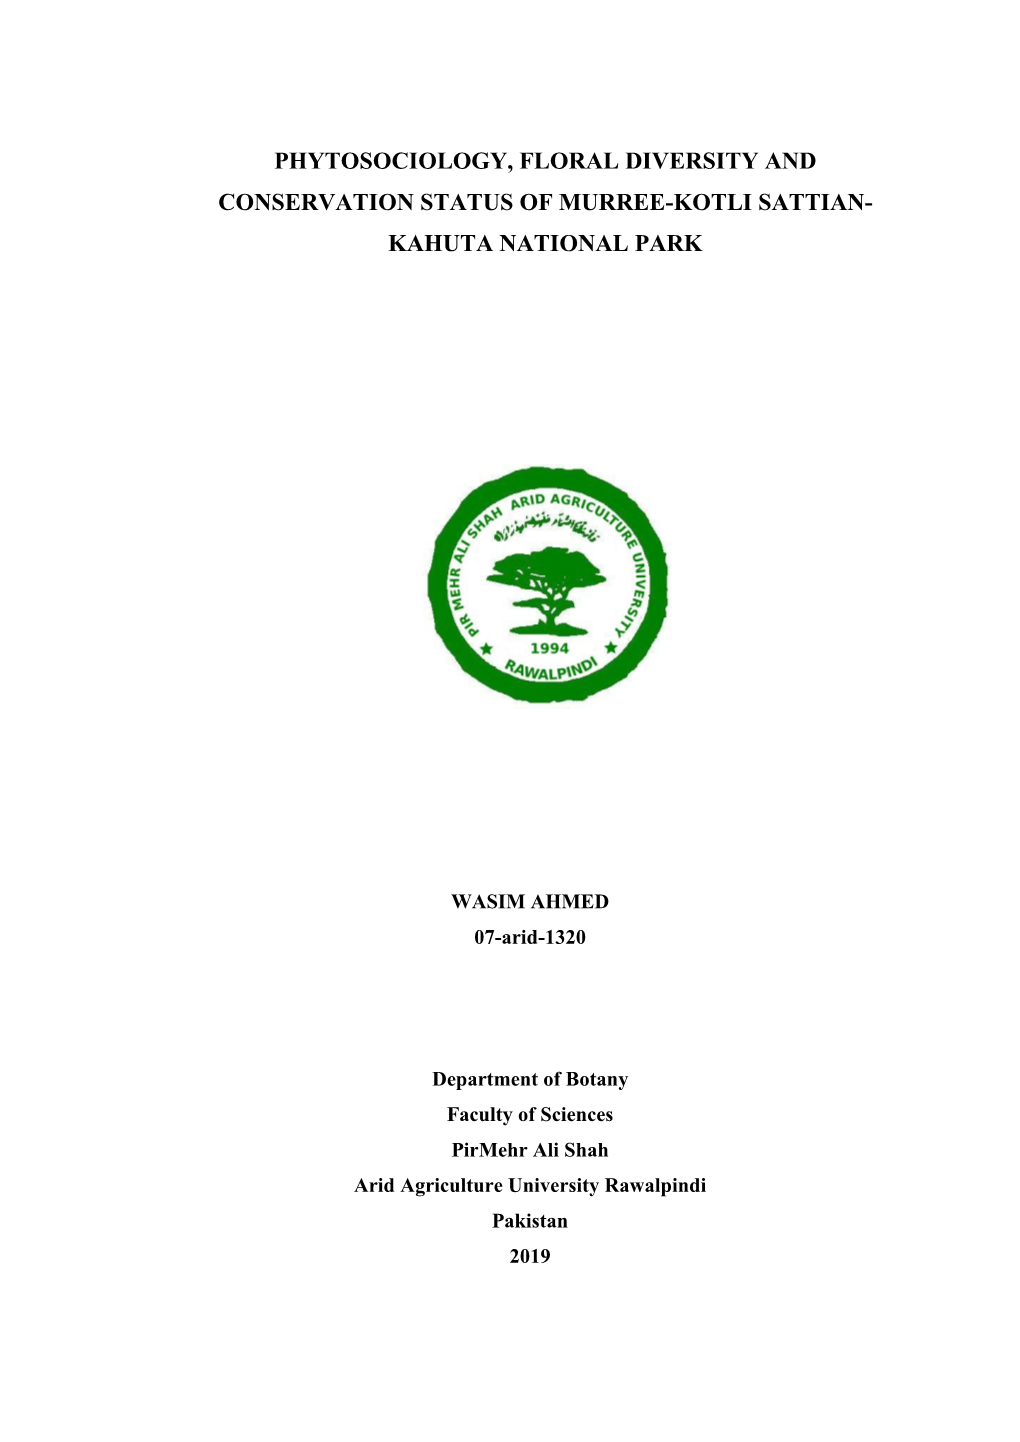 Kahuta National Park